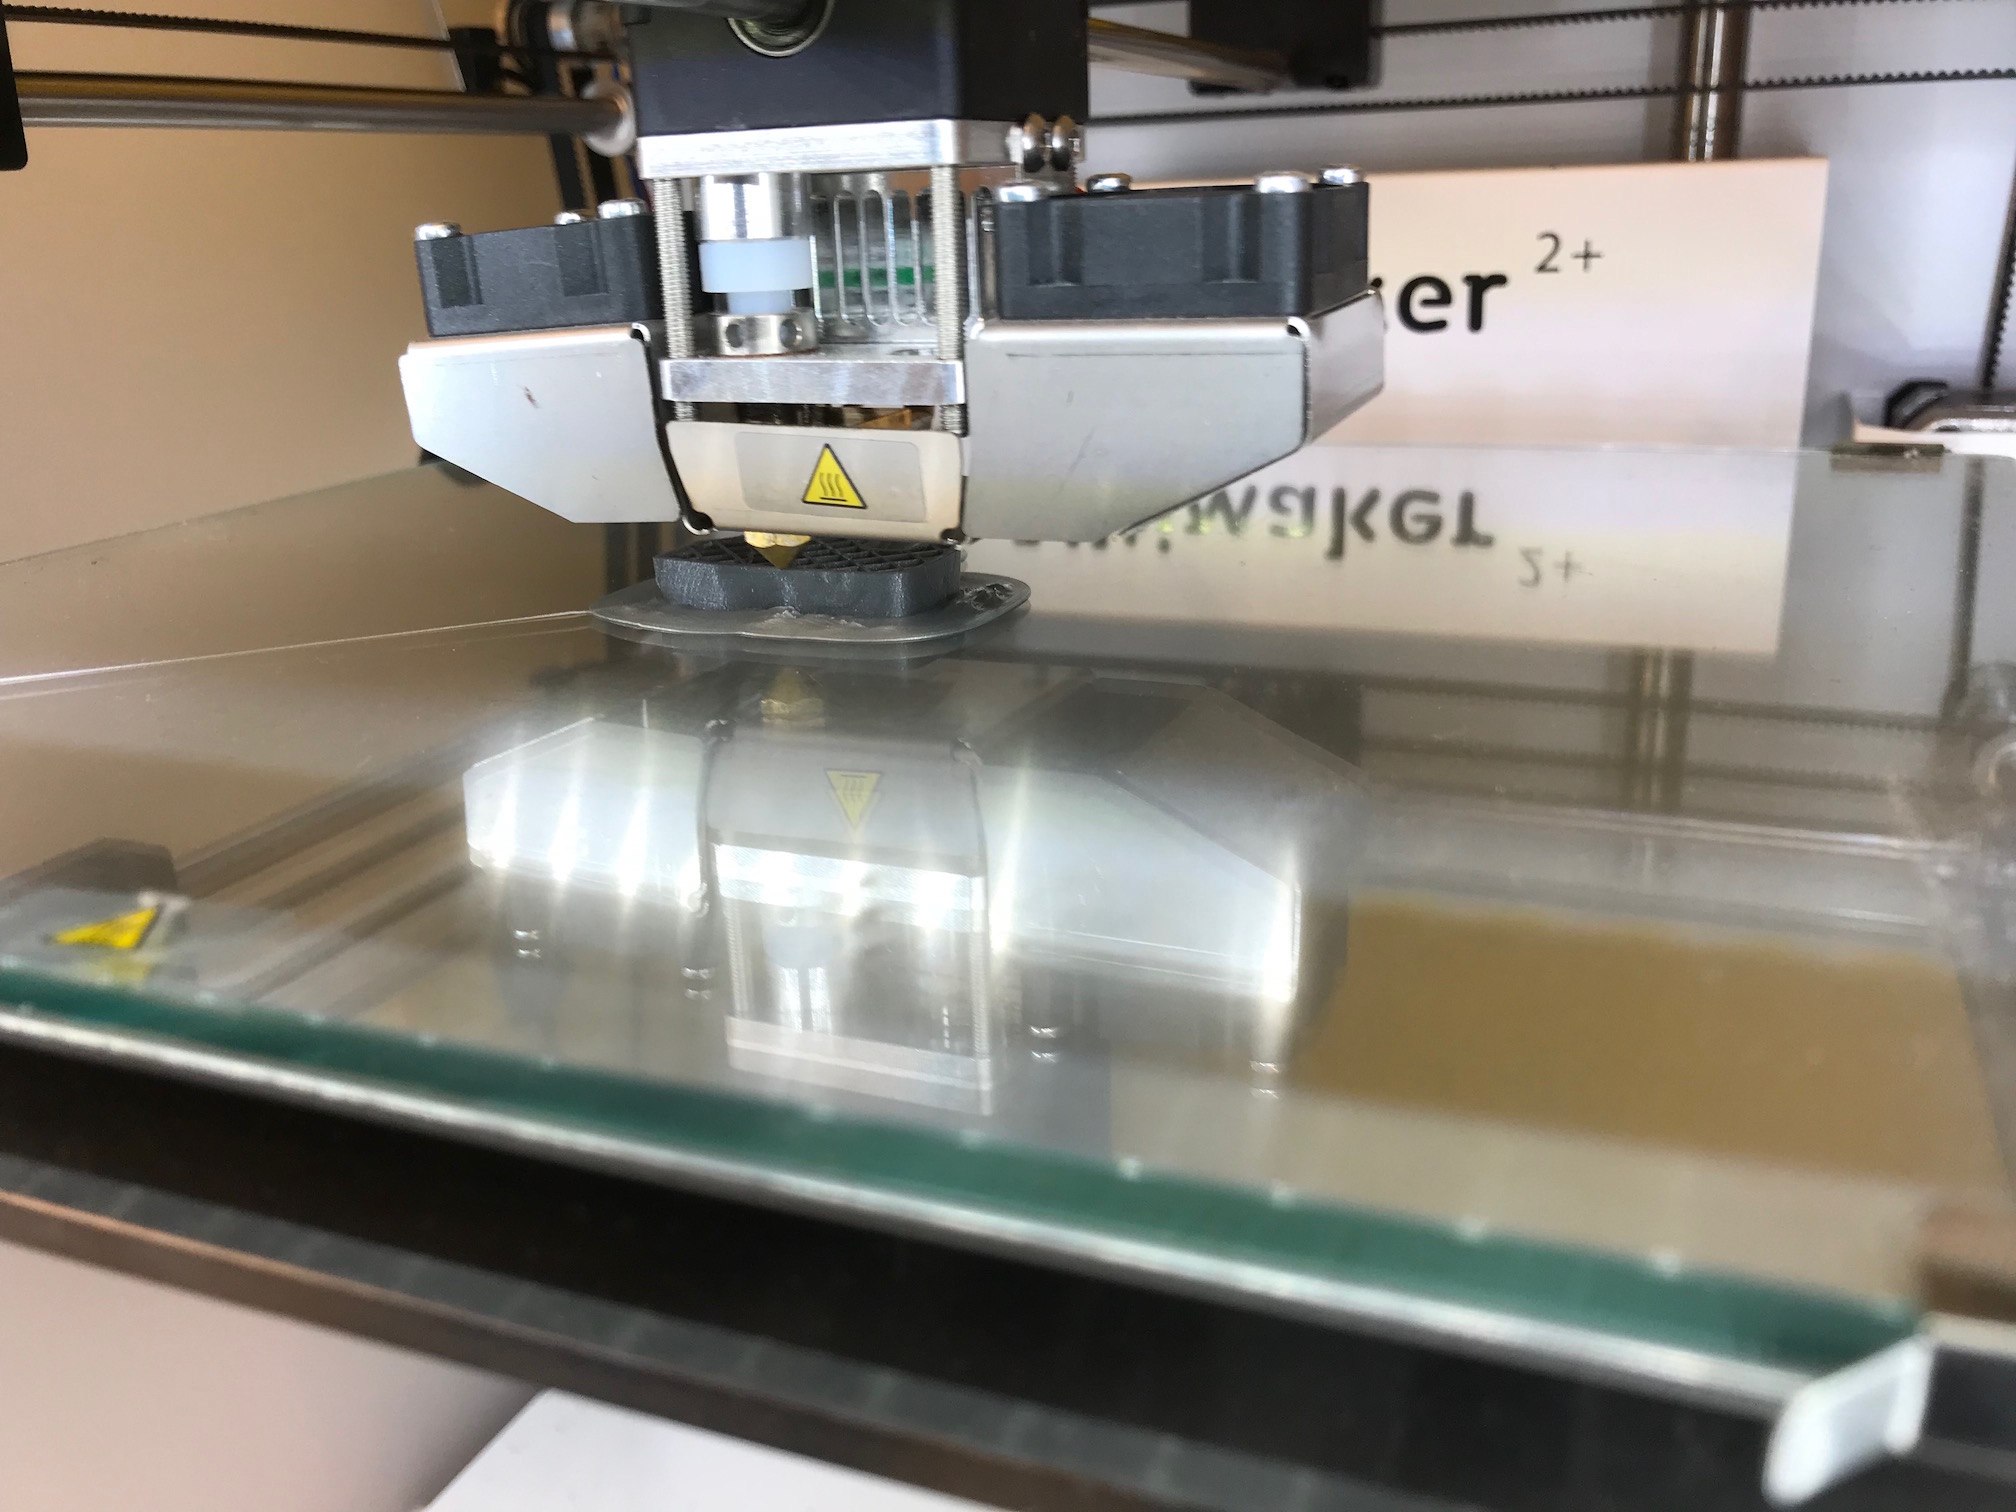 Camera being printed